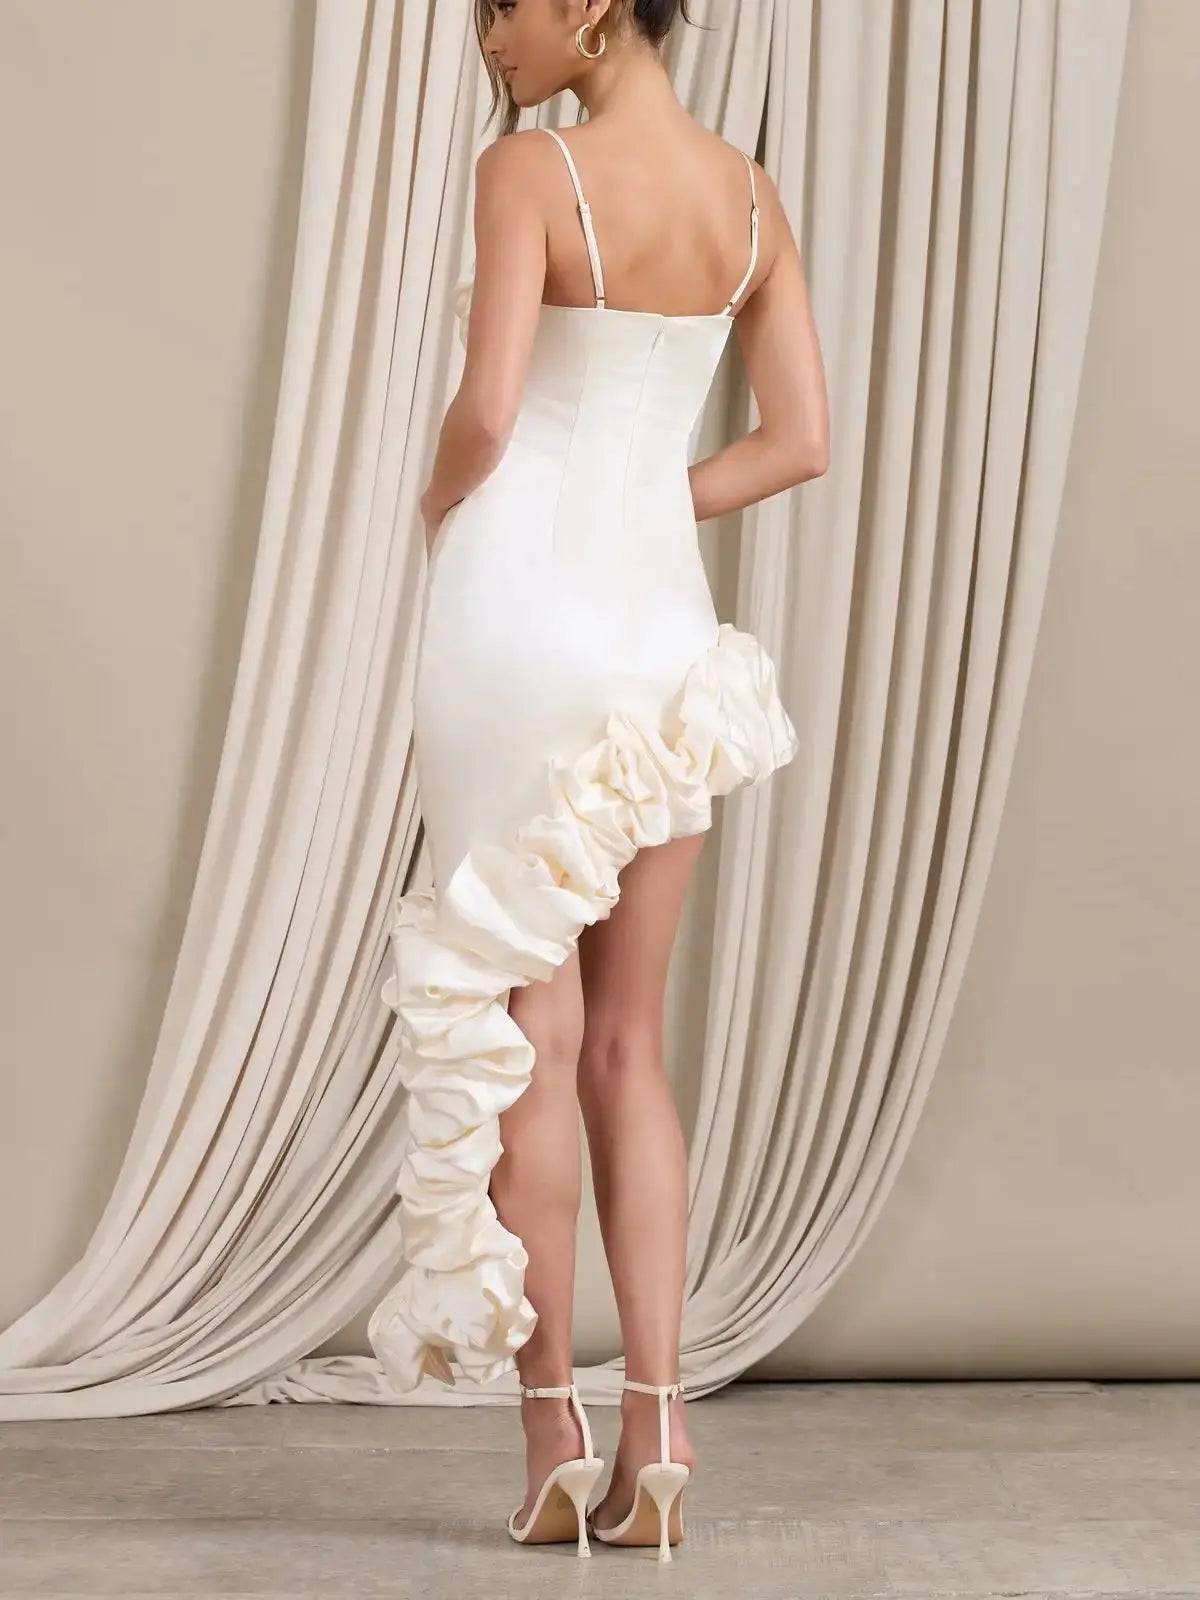 Canmol Elegant Irregular Satin Party Dress for Women celebrities, White Pink, 2023 Model